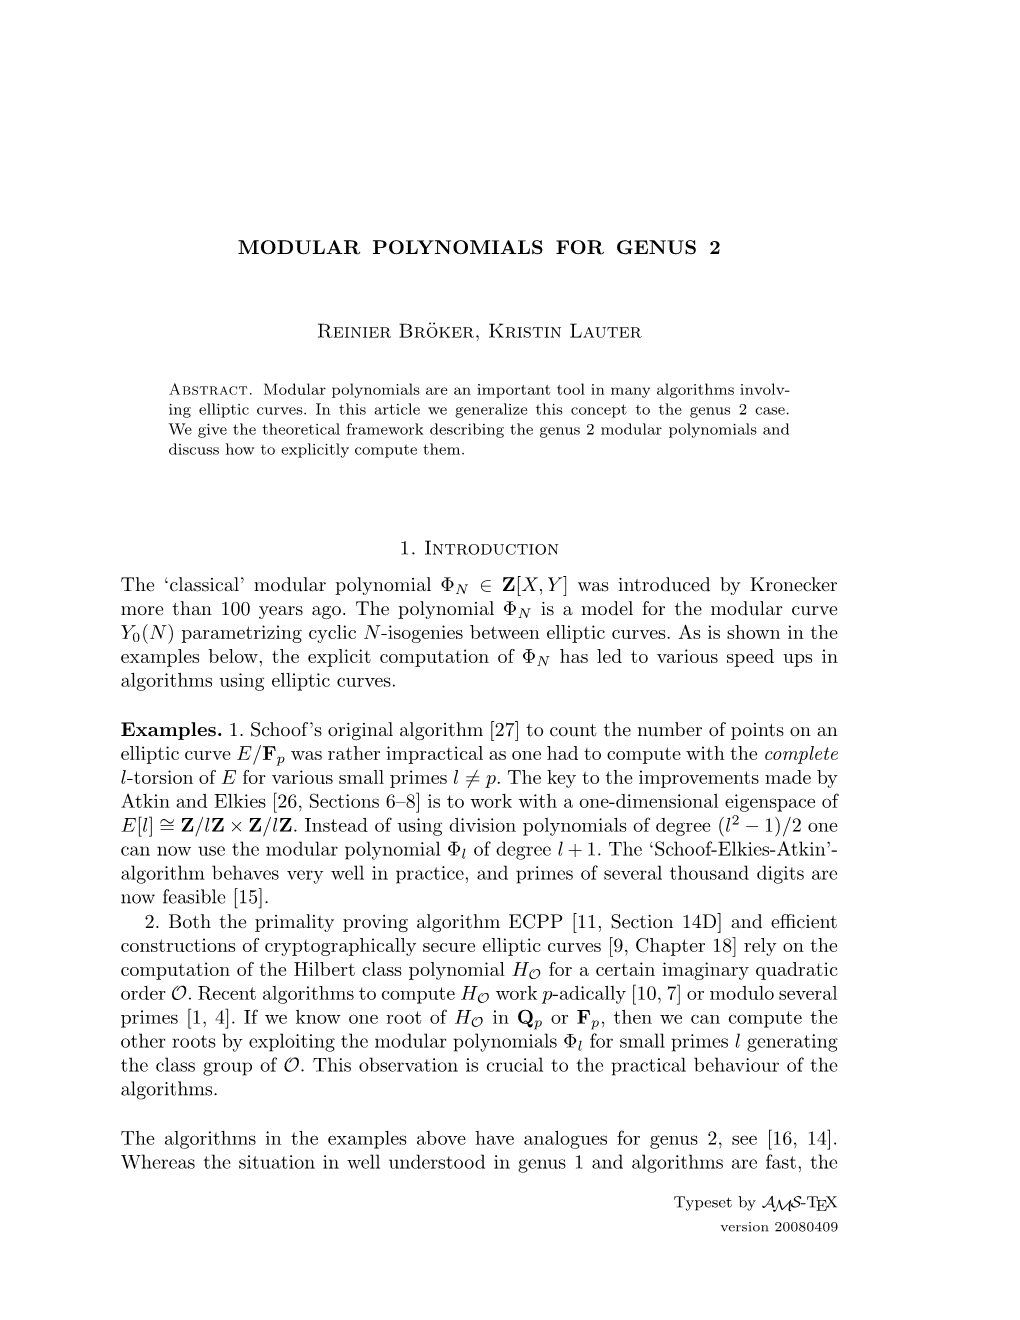 Modular Polynomial ΦN ∈ Z[X,Y ] Was Introduced by Kronecker More Than 100 Years Ago